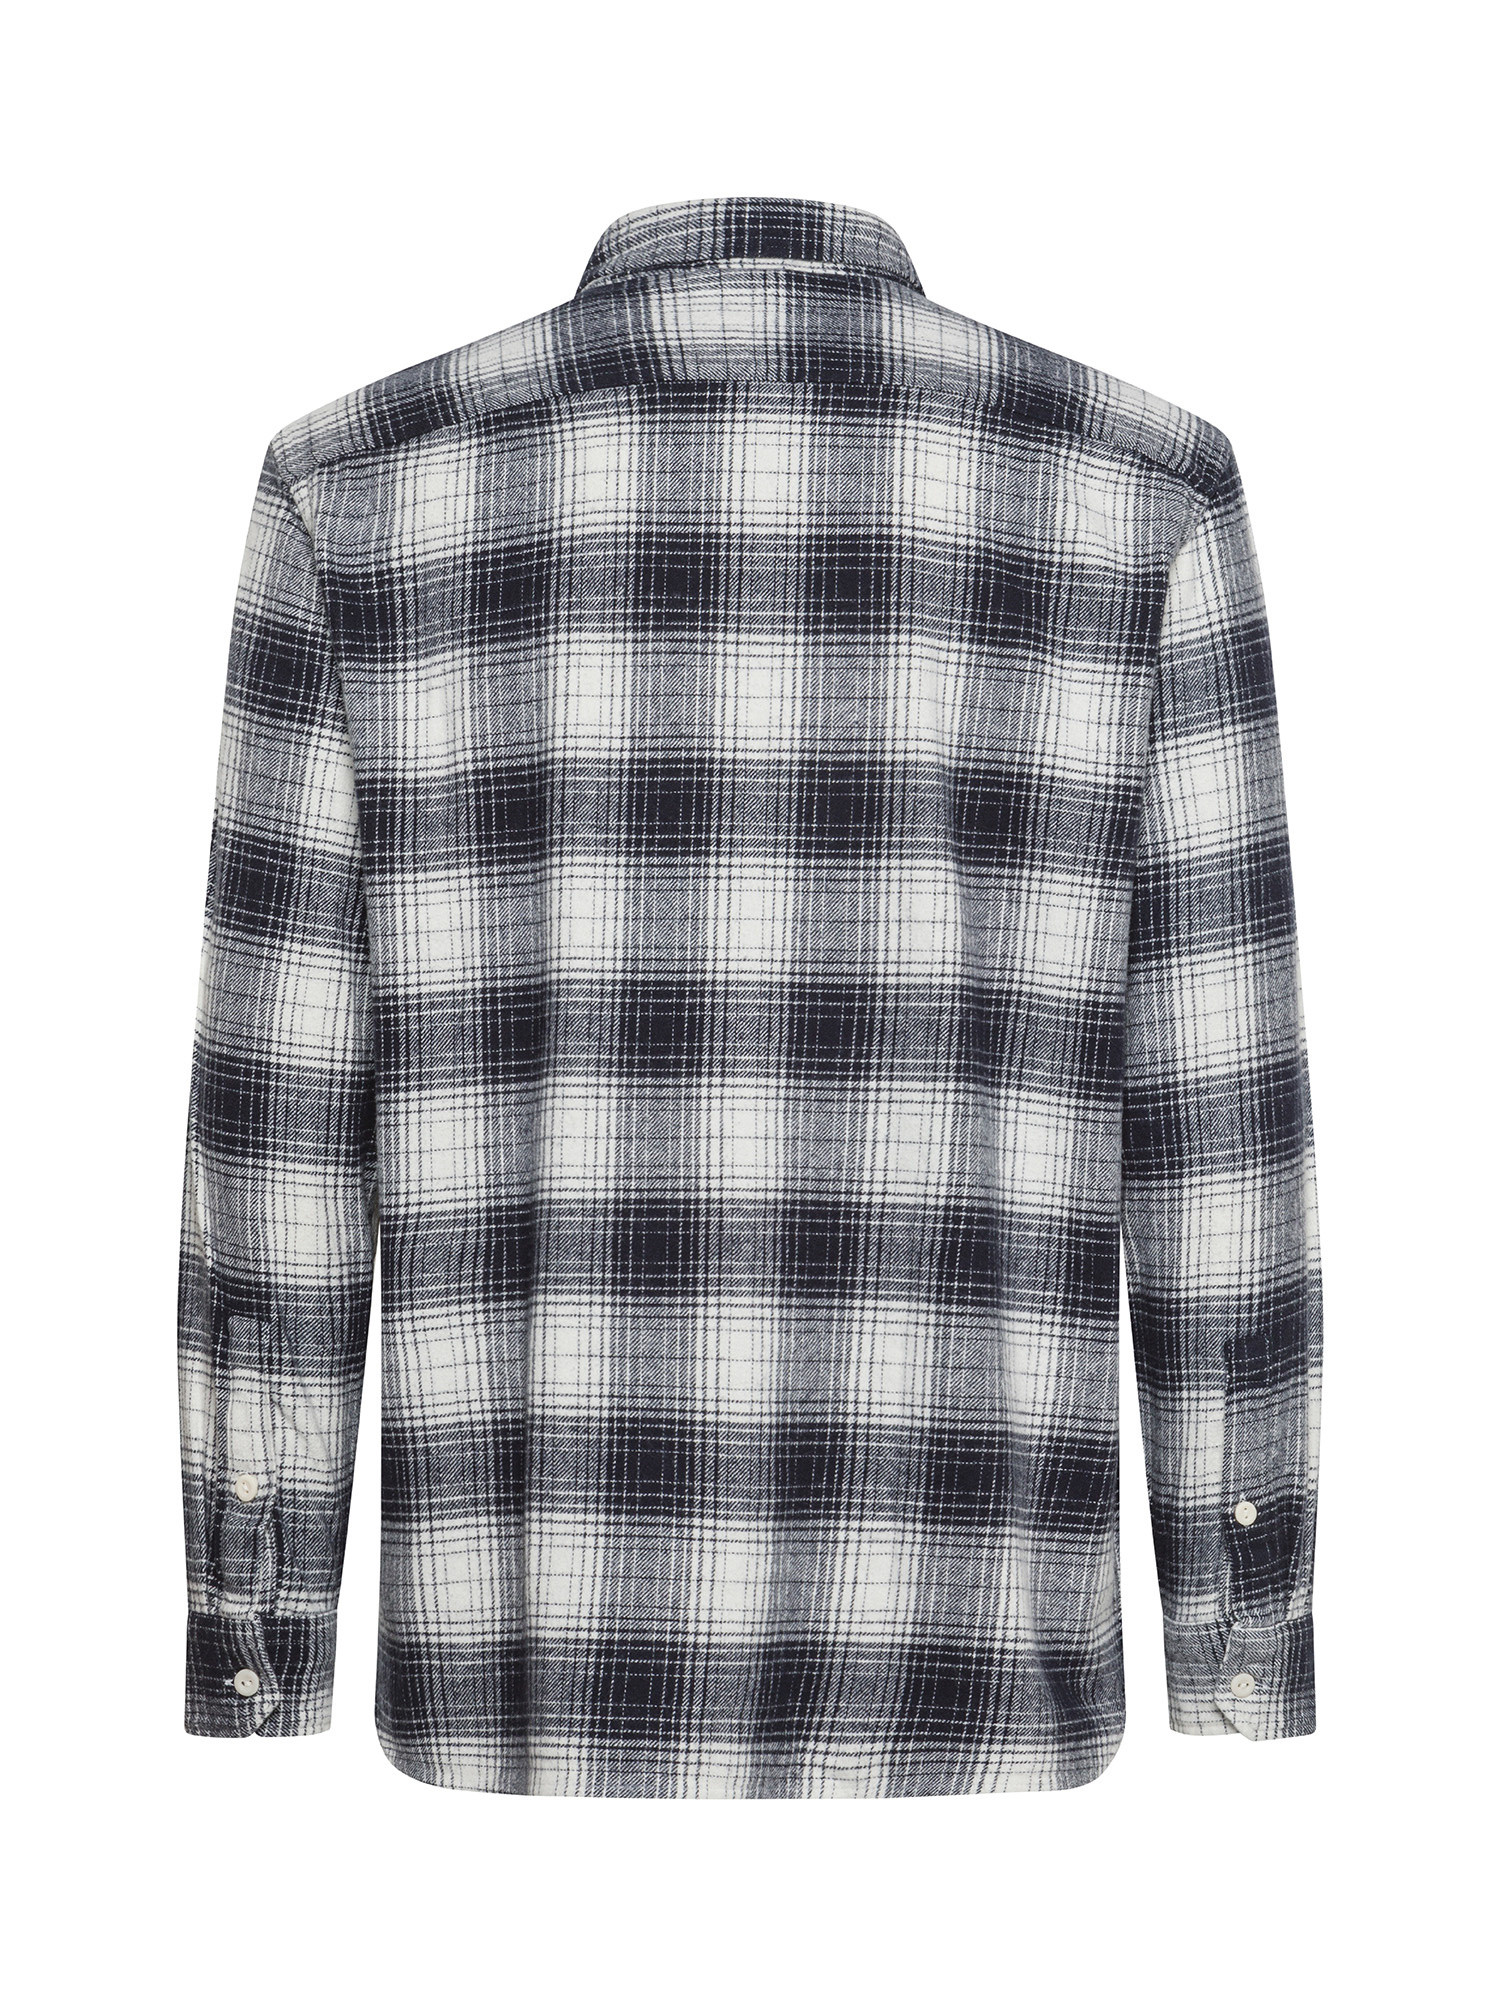 Levi's - Check shirt, Black, large image number 1